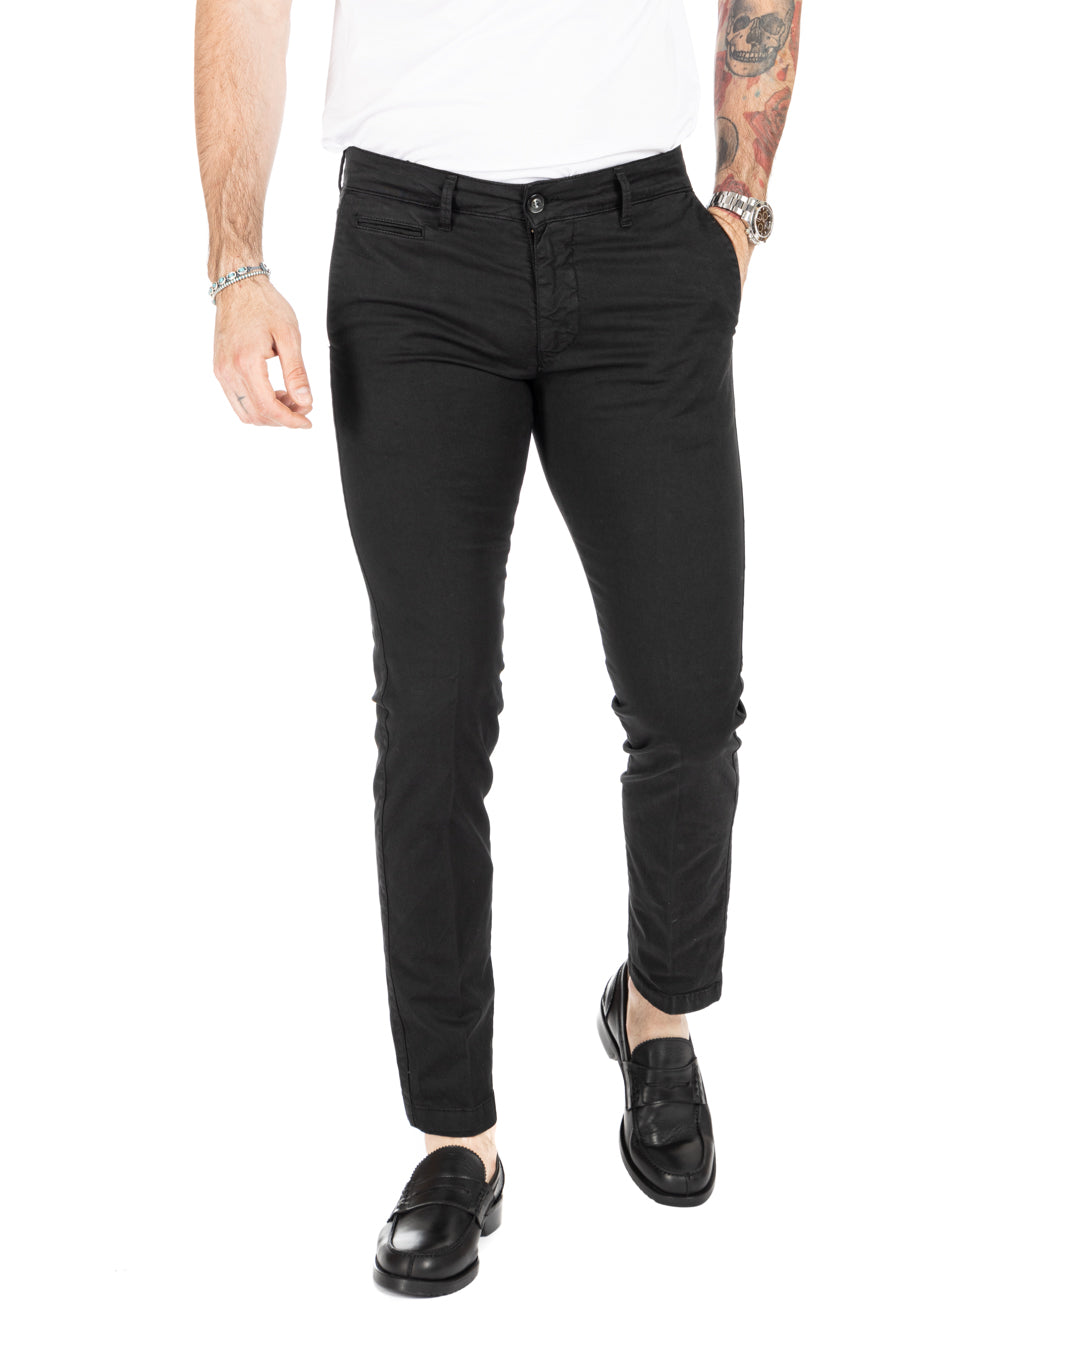 Frank - black basic trousers